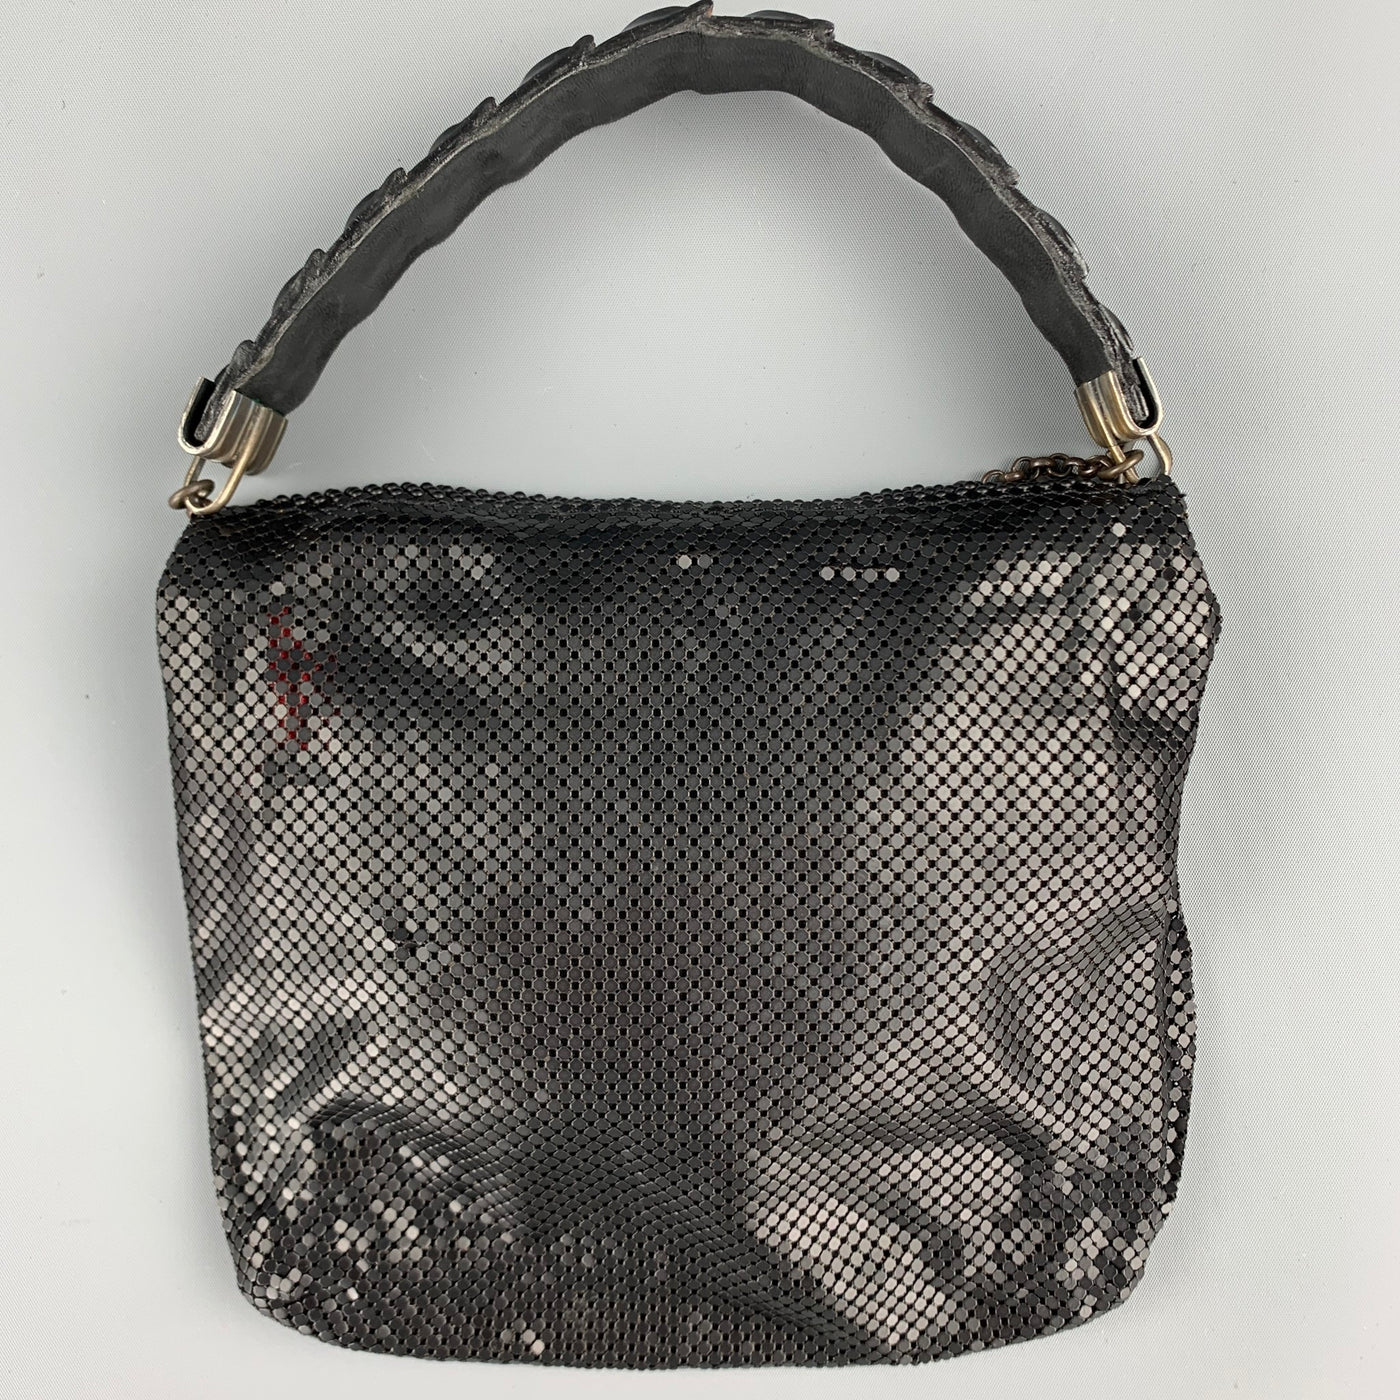 LAURA B Black Mesh Metal Alligator Evening Handbag